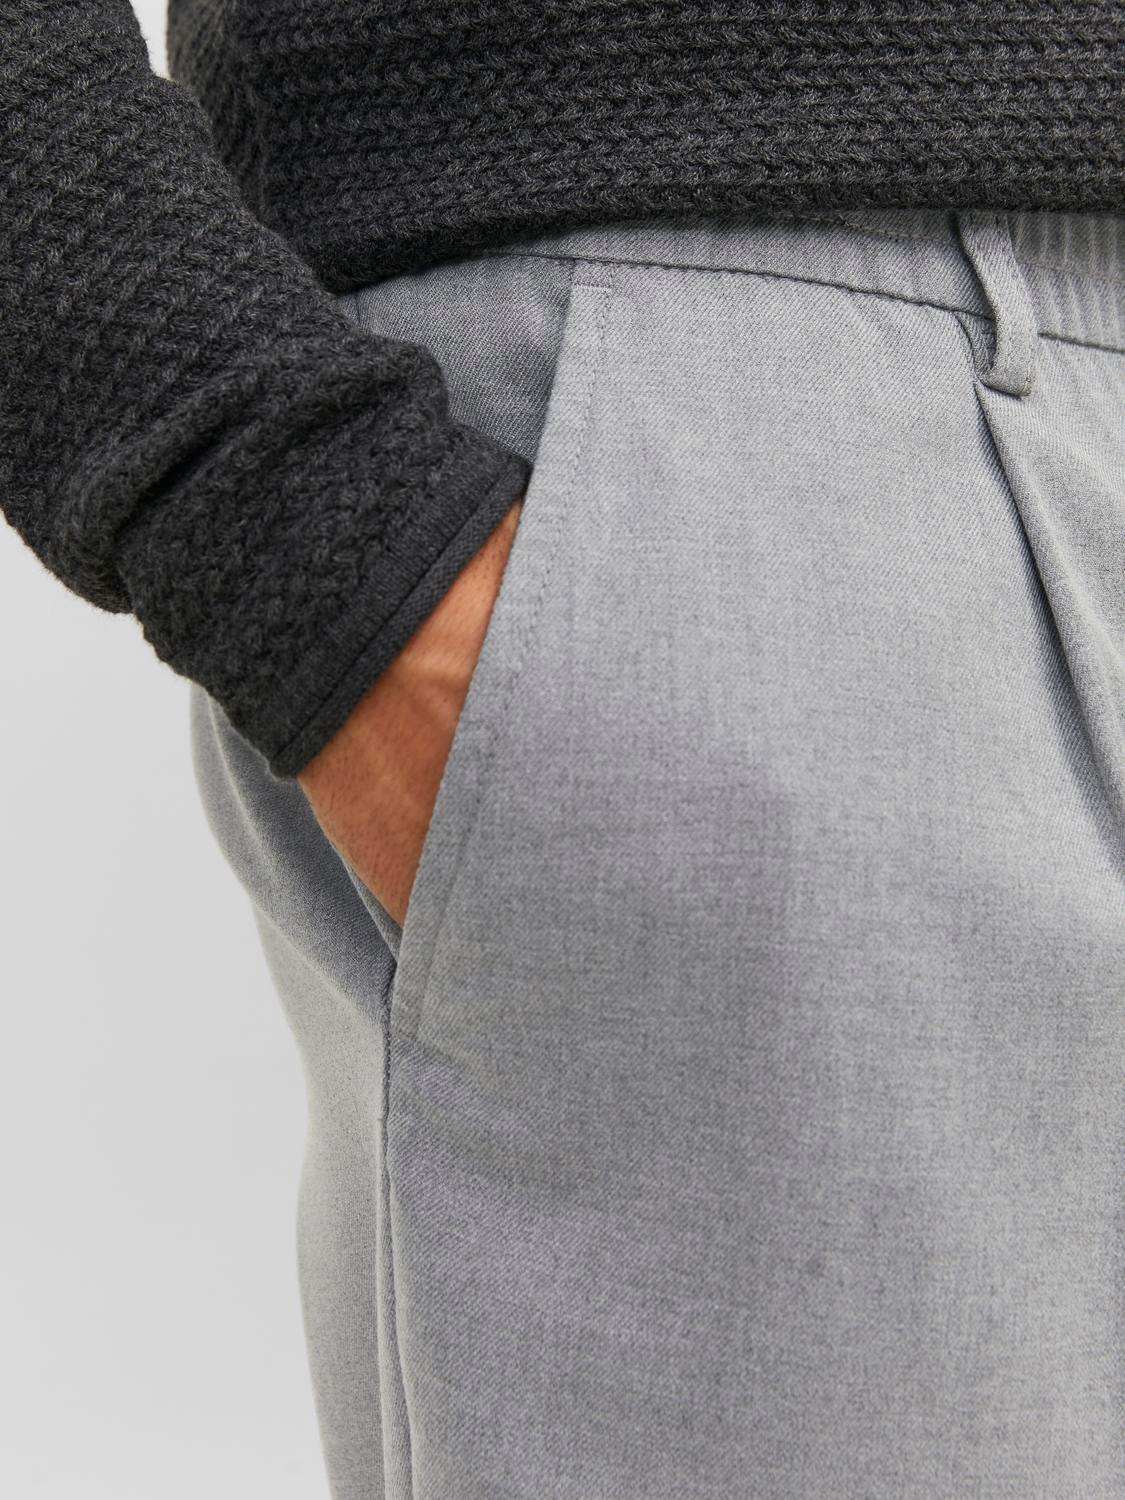 Jack & Jones Pantalones chinos Loose Fit -Light Grey Melange - 12242212